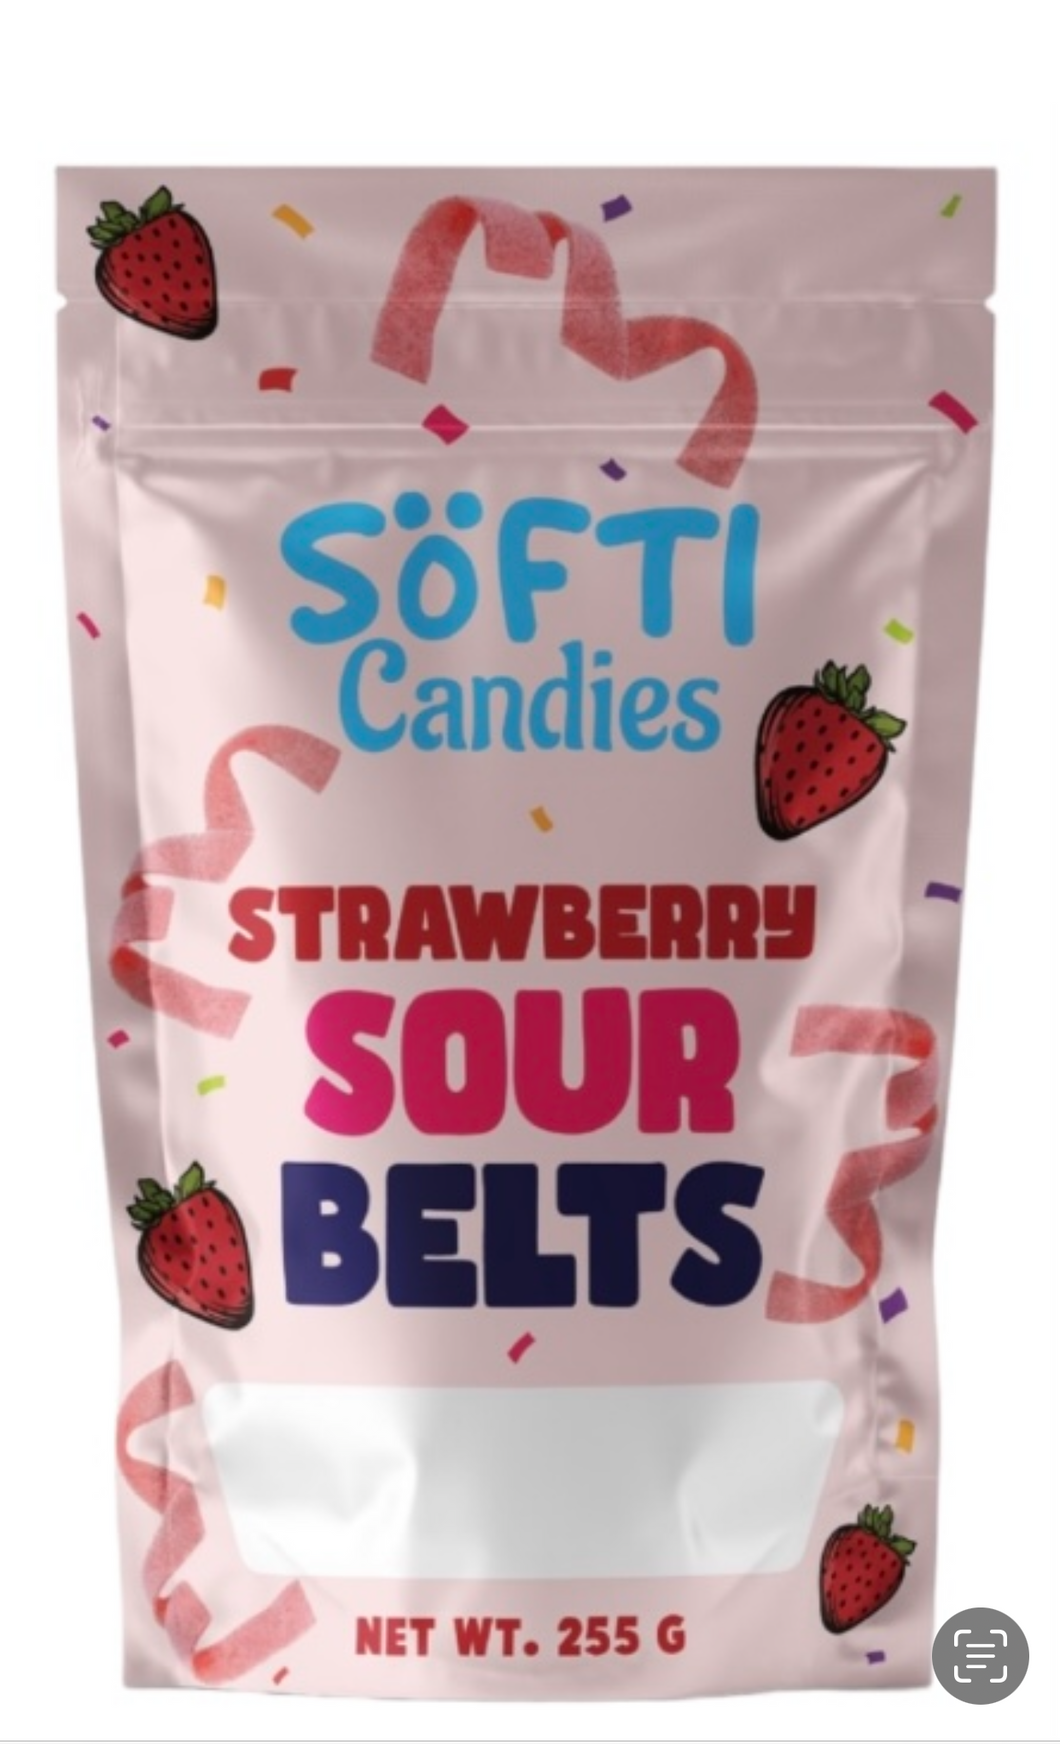 Softi Candies: Strawberry Belts 6oz